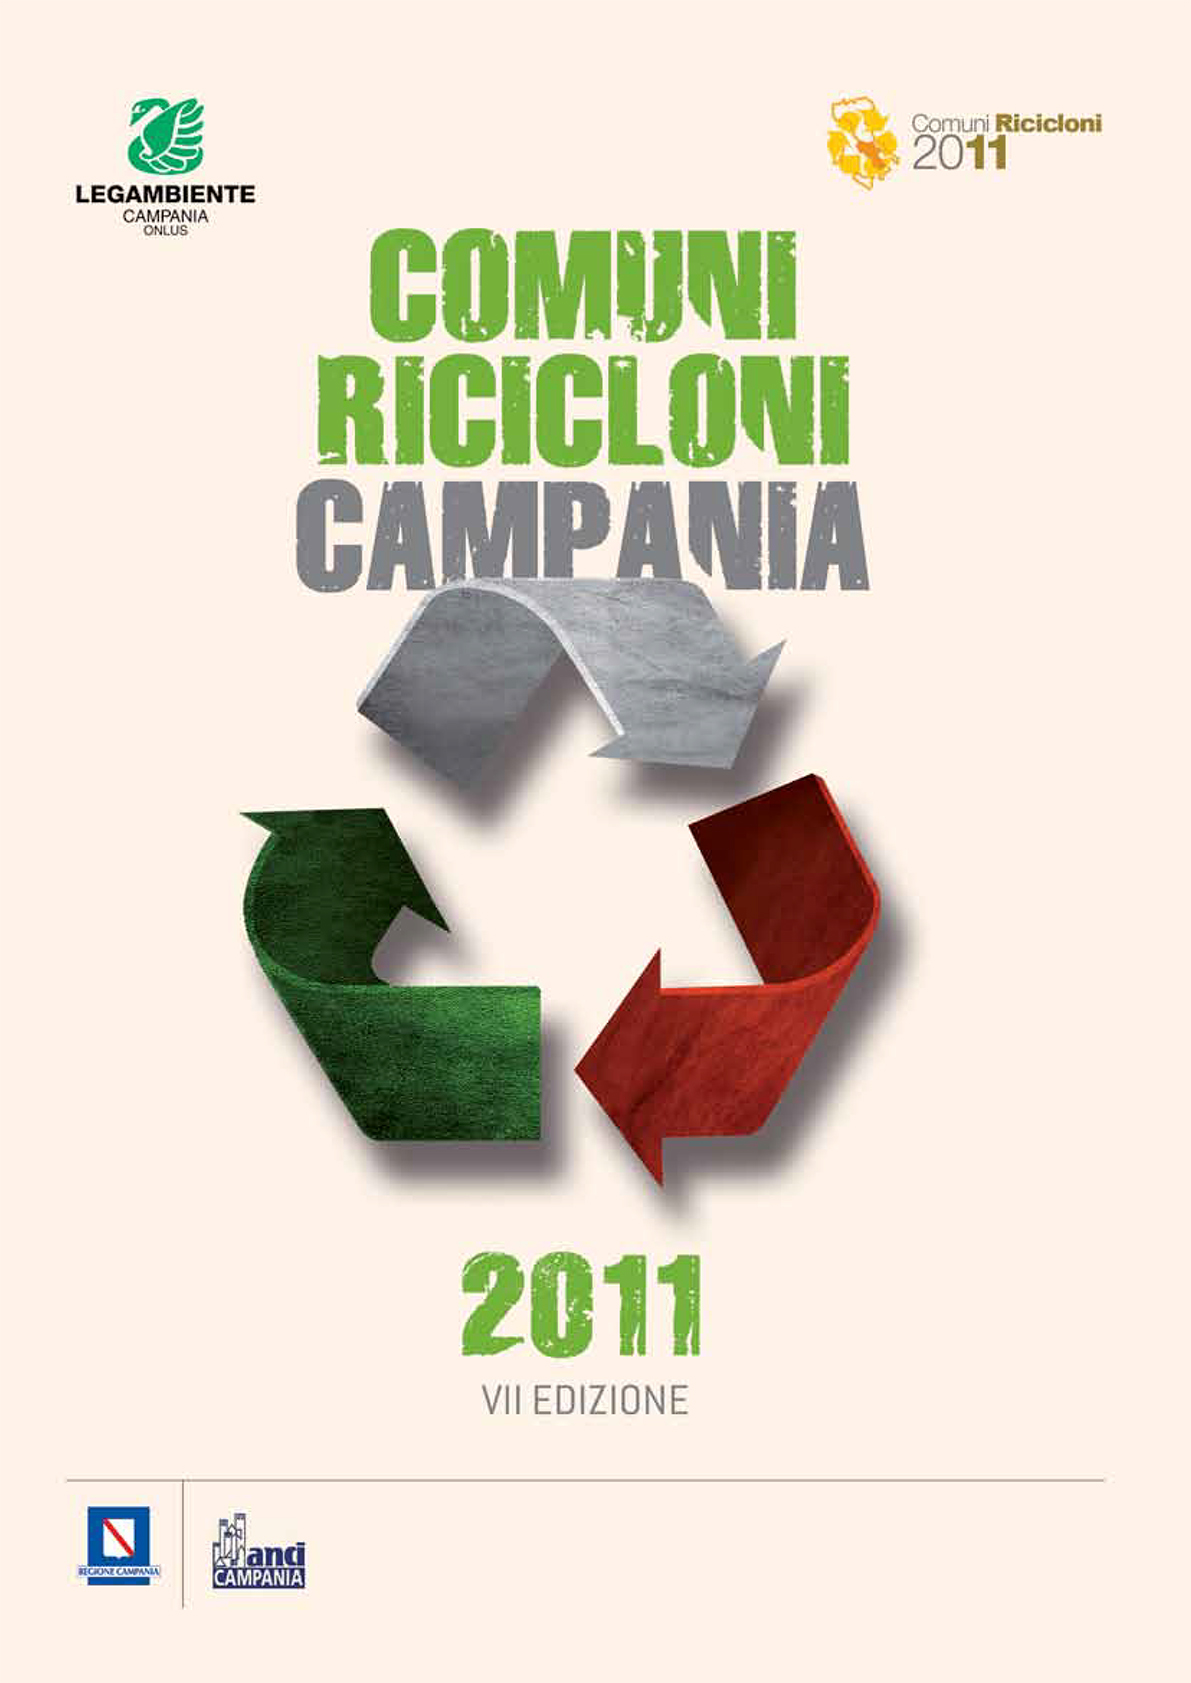 cr_campania_2011-1408156866.jpg